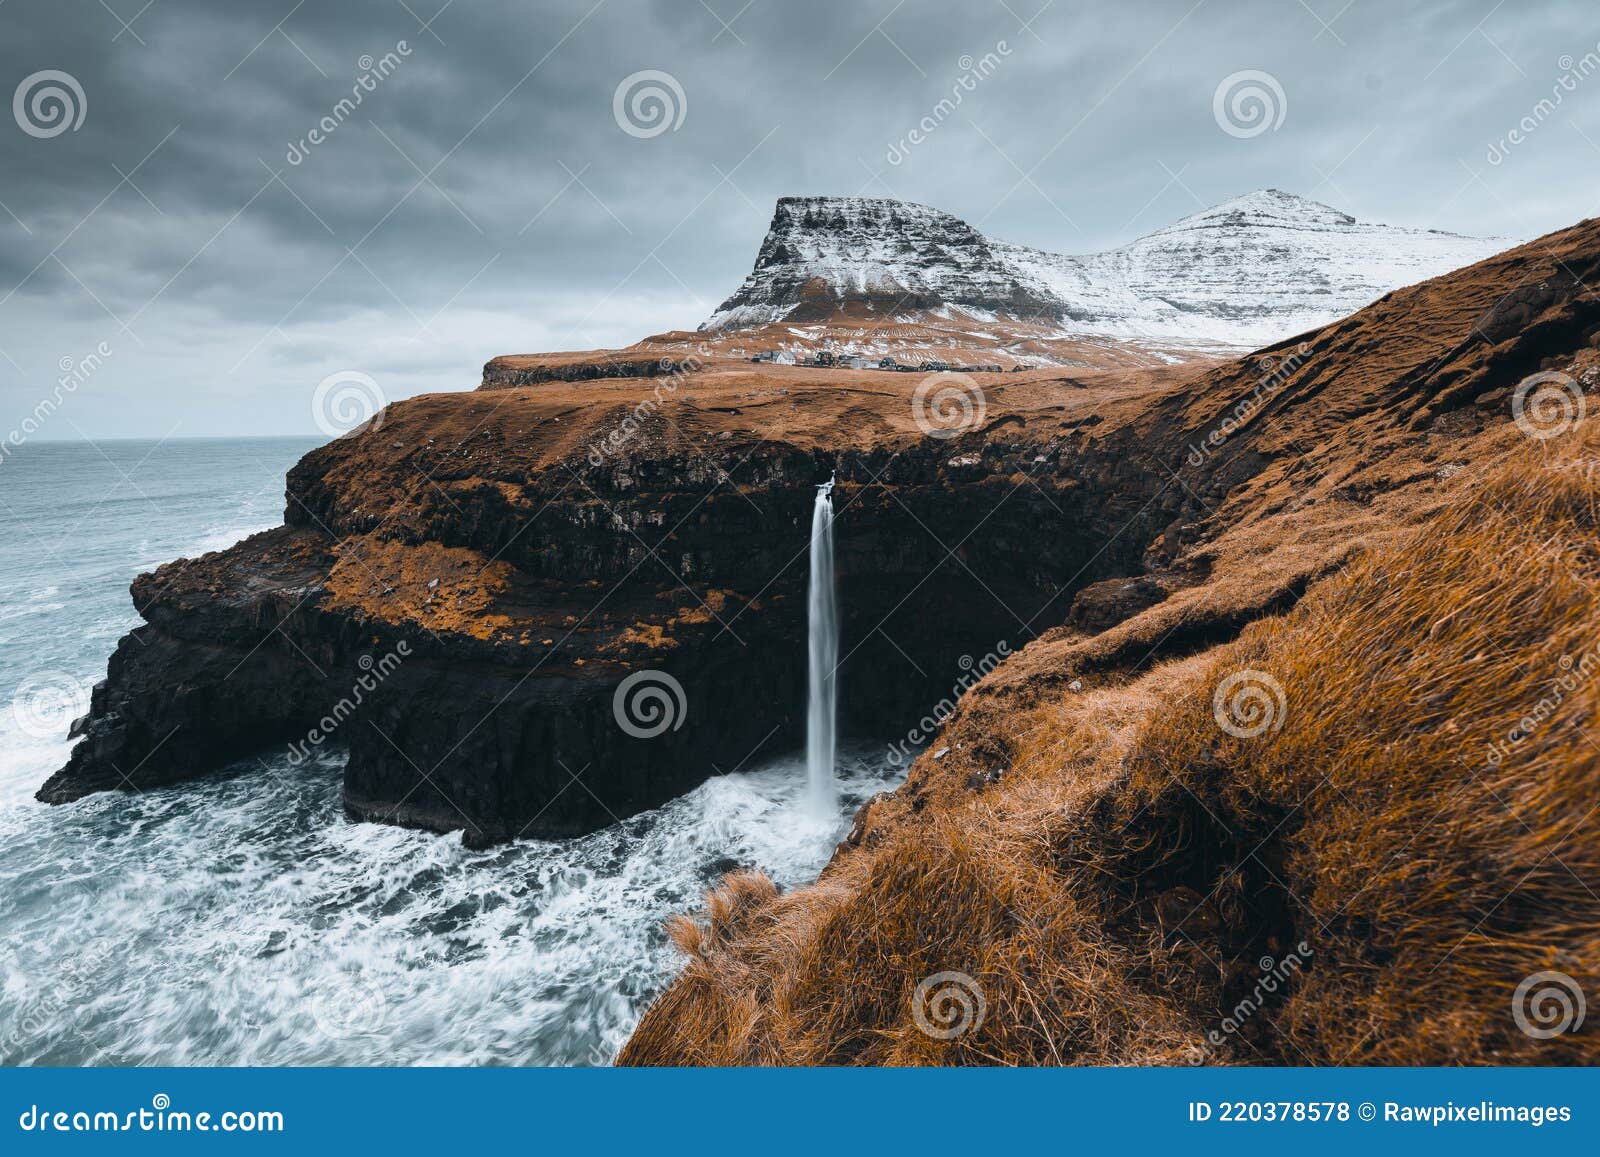 view of natural highland waterfall